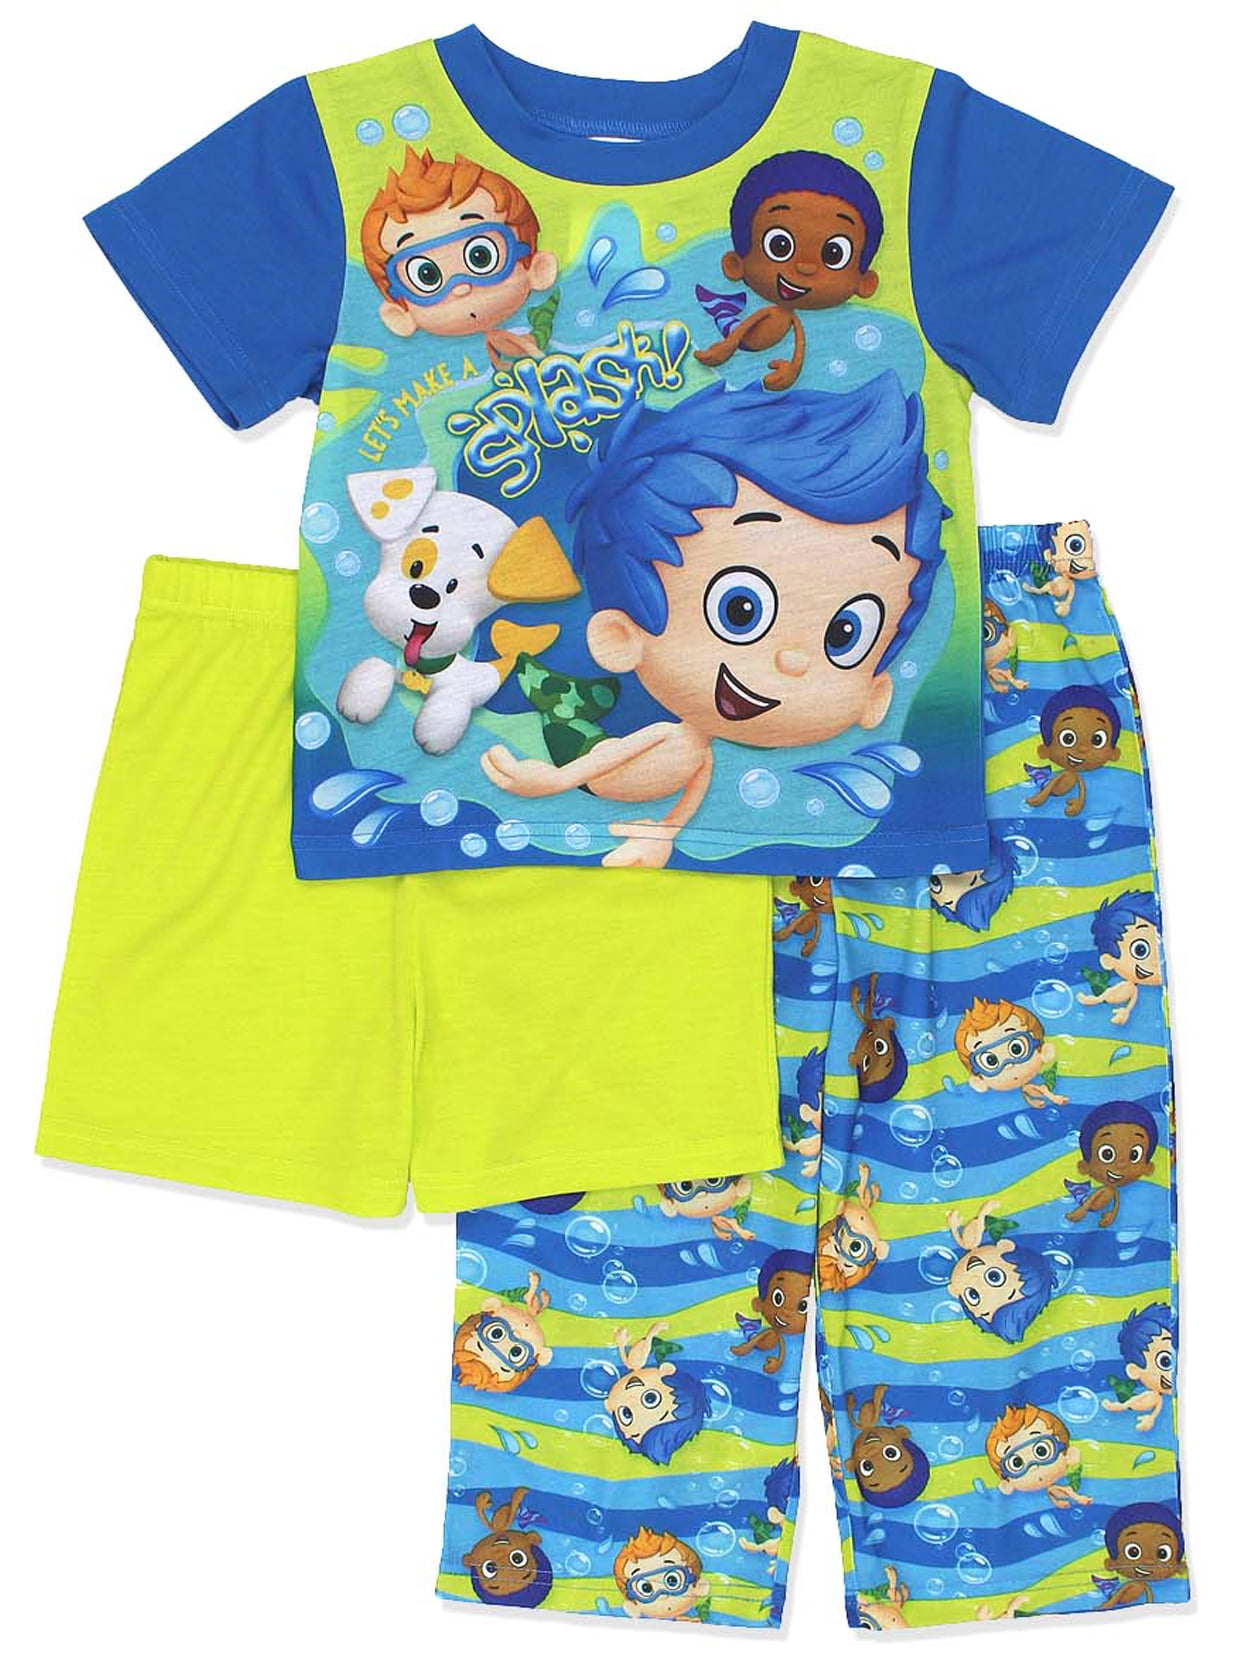 Nickelodeon Bubble Guppies Toddler Boys 3 Piece Pajamas Set 21ns022ezs Walmart Com Walmart Com